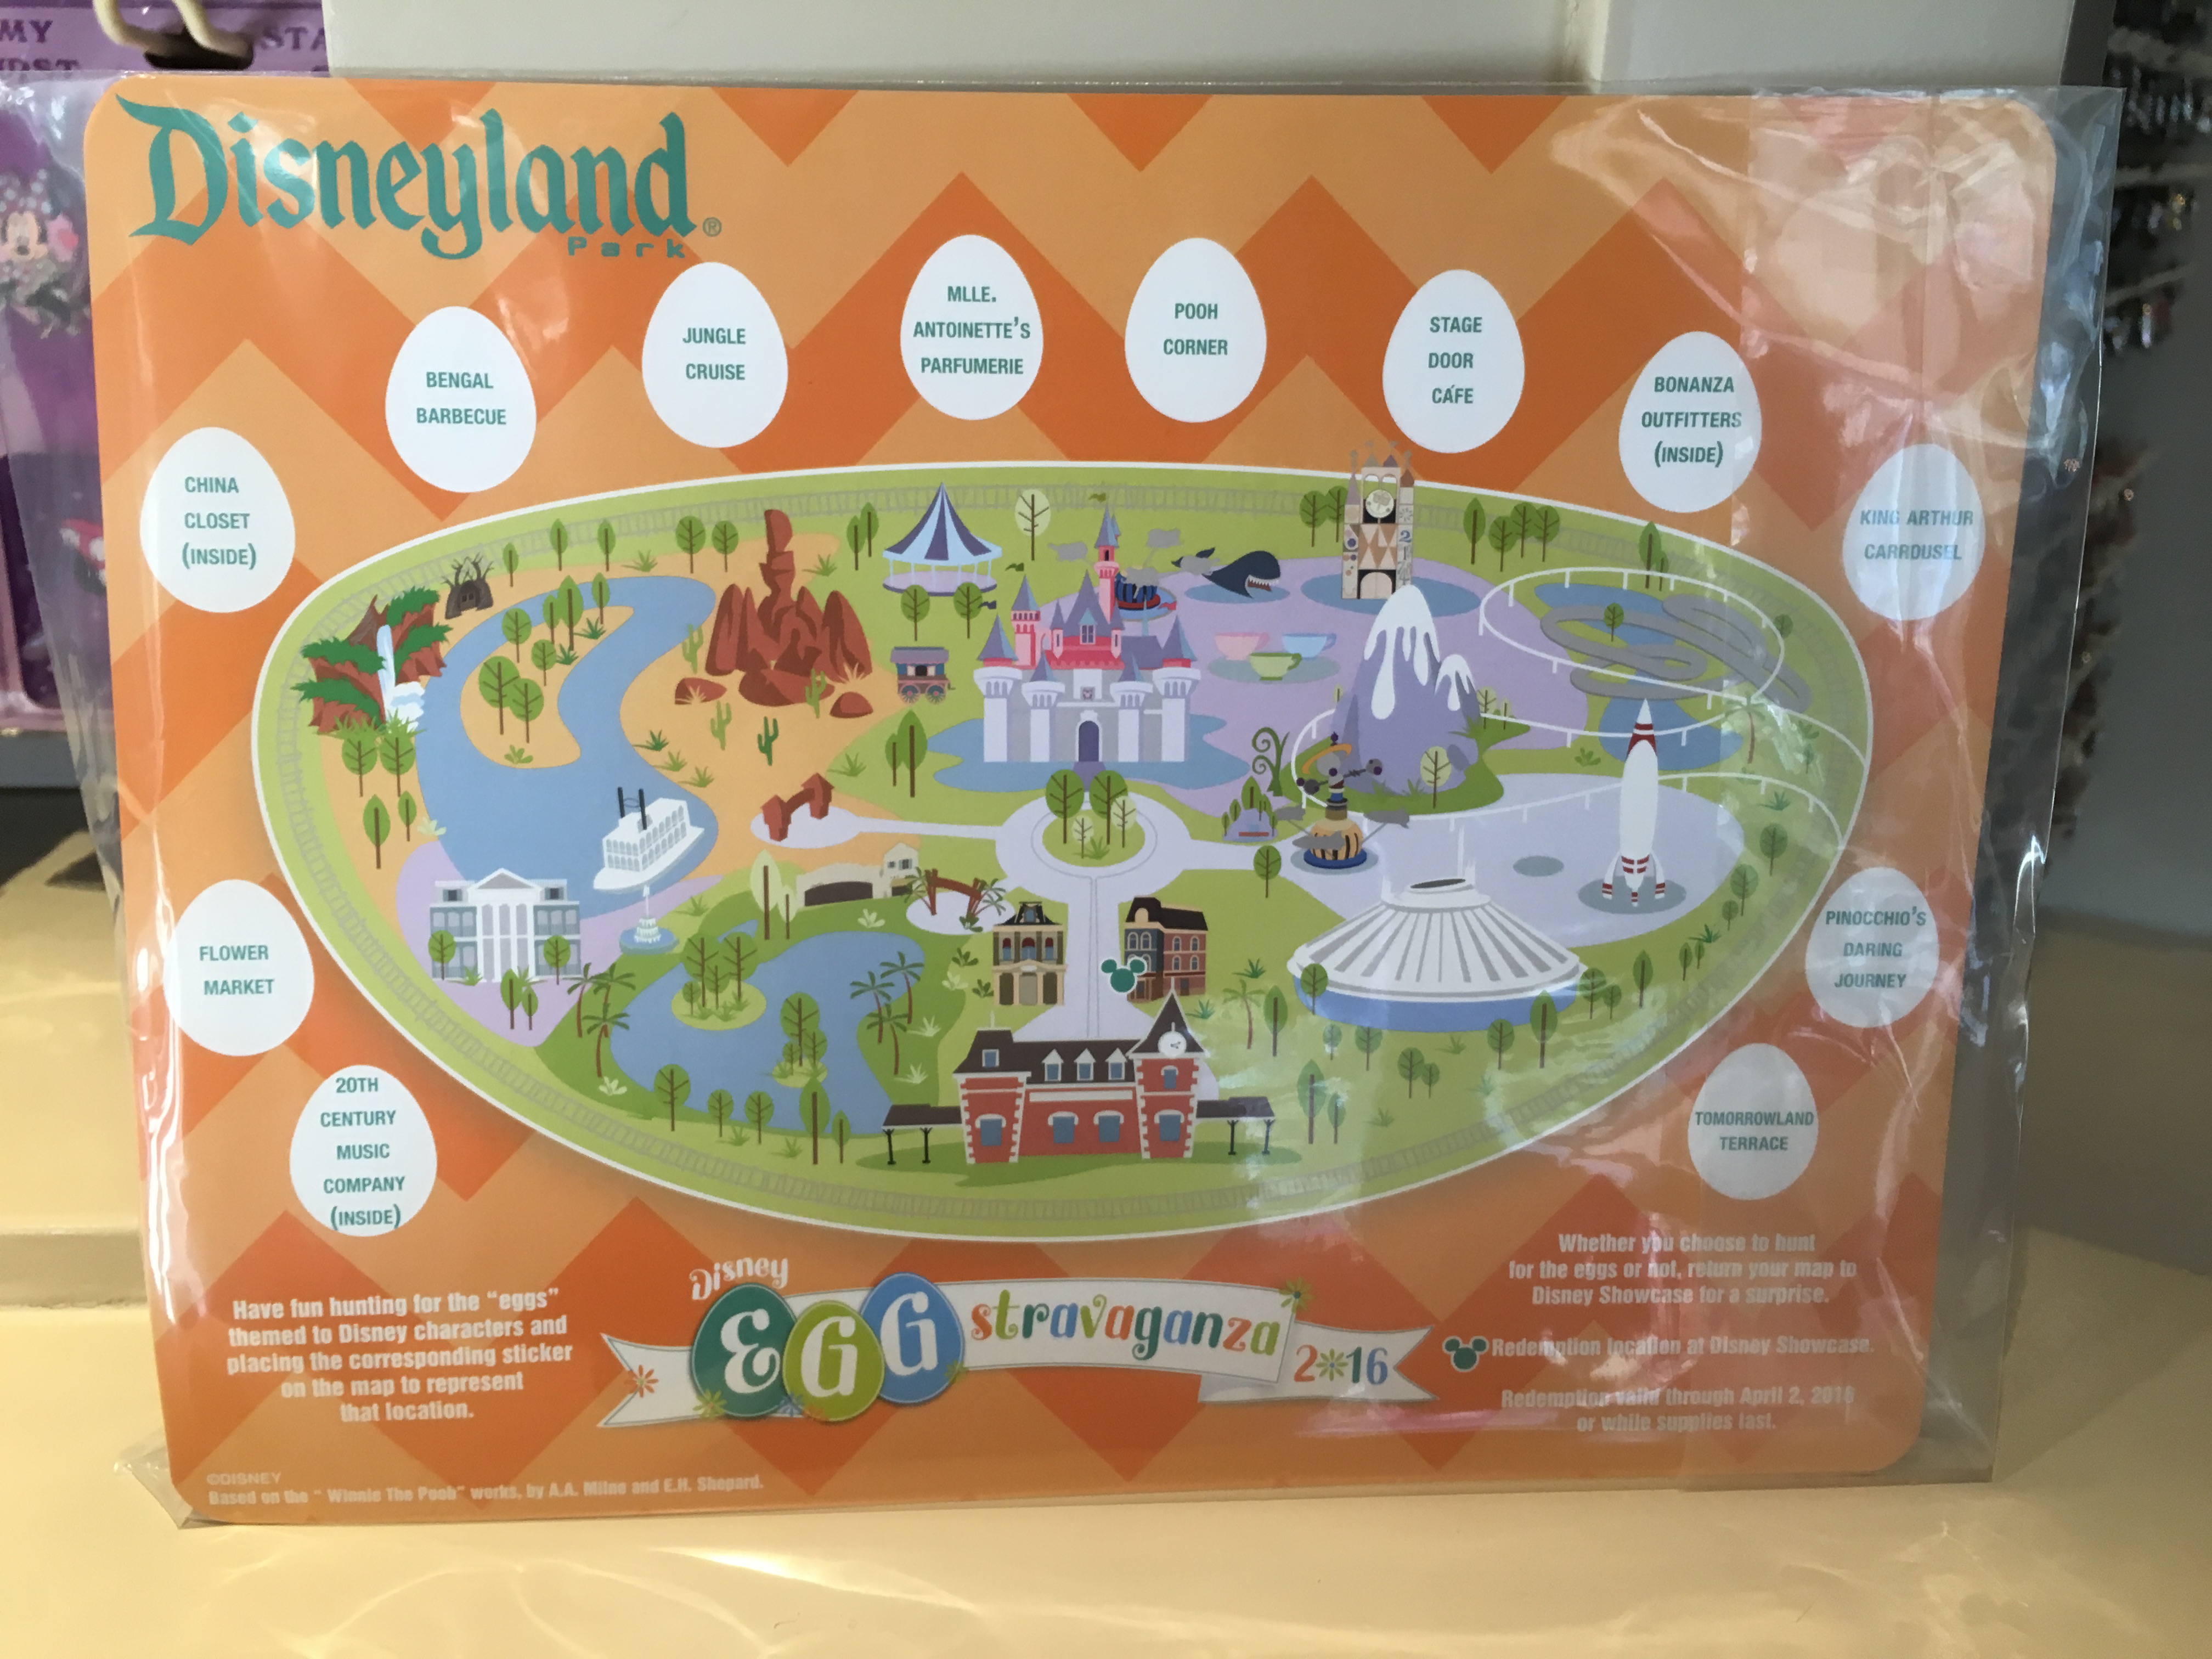 Eggstravaganza 2016 at the Disneyland Resort — A Photo Guide and Cheat ...